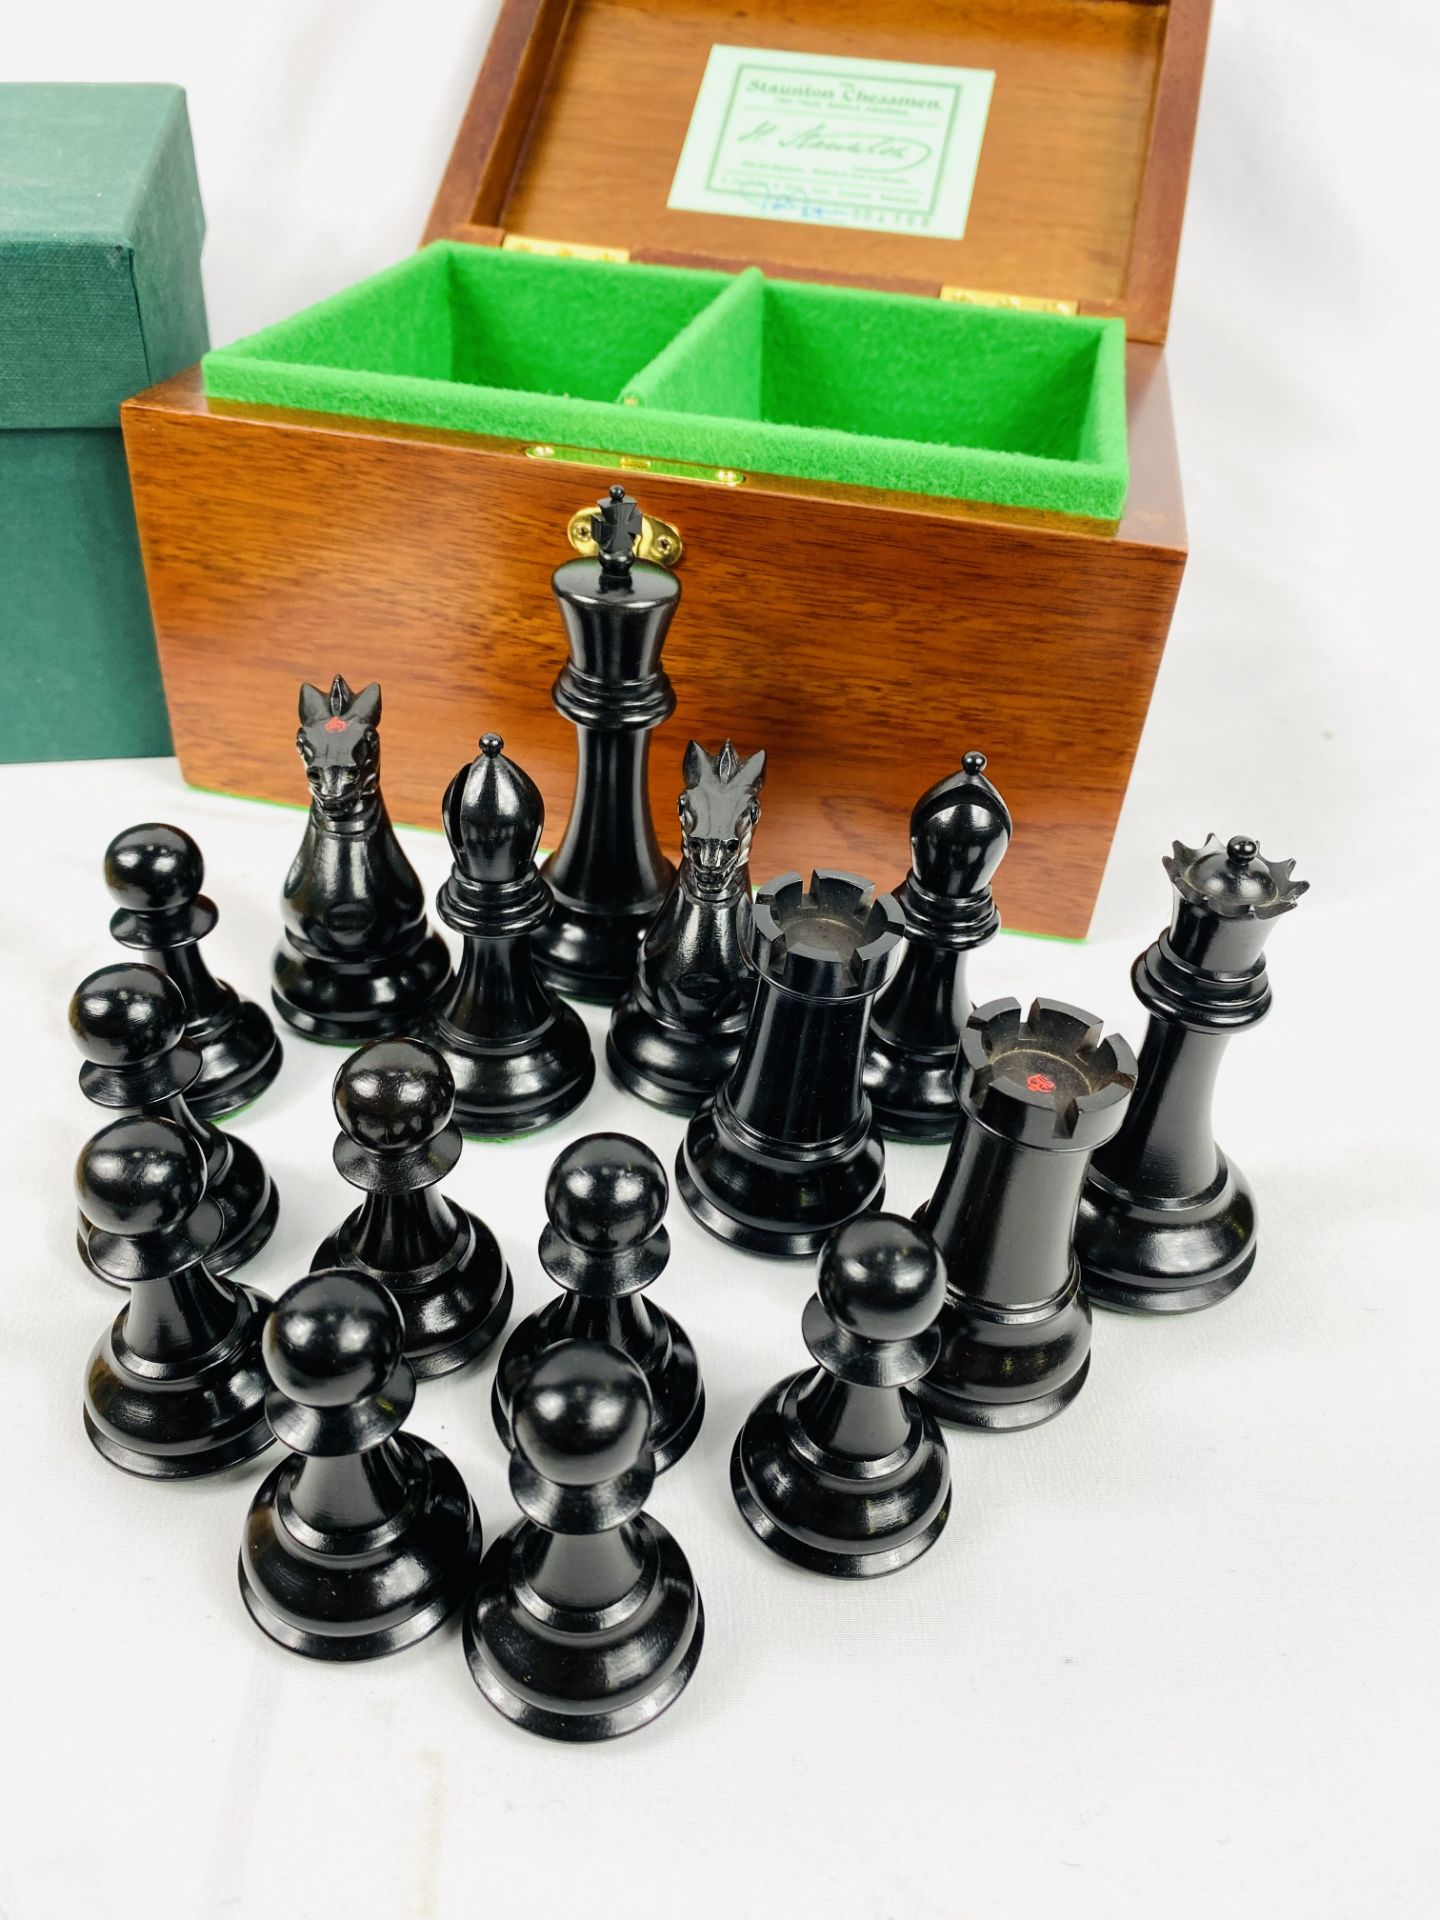 Jaques Staunton chess set - Image 3 of 6